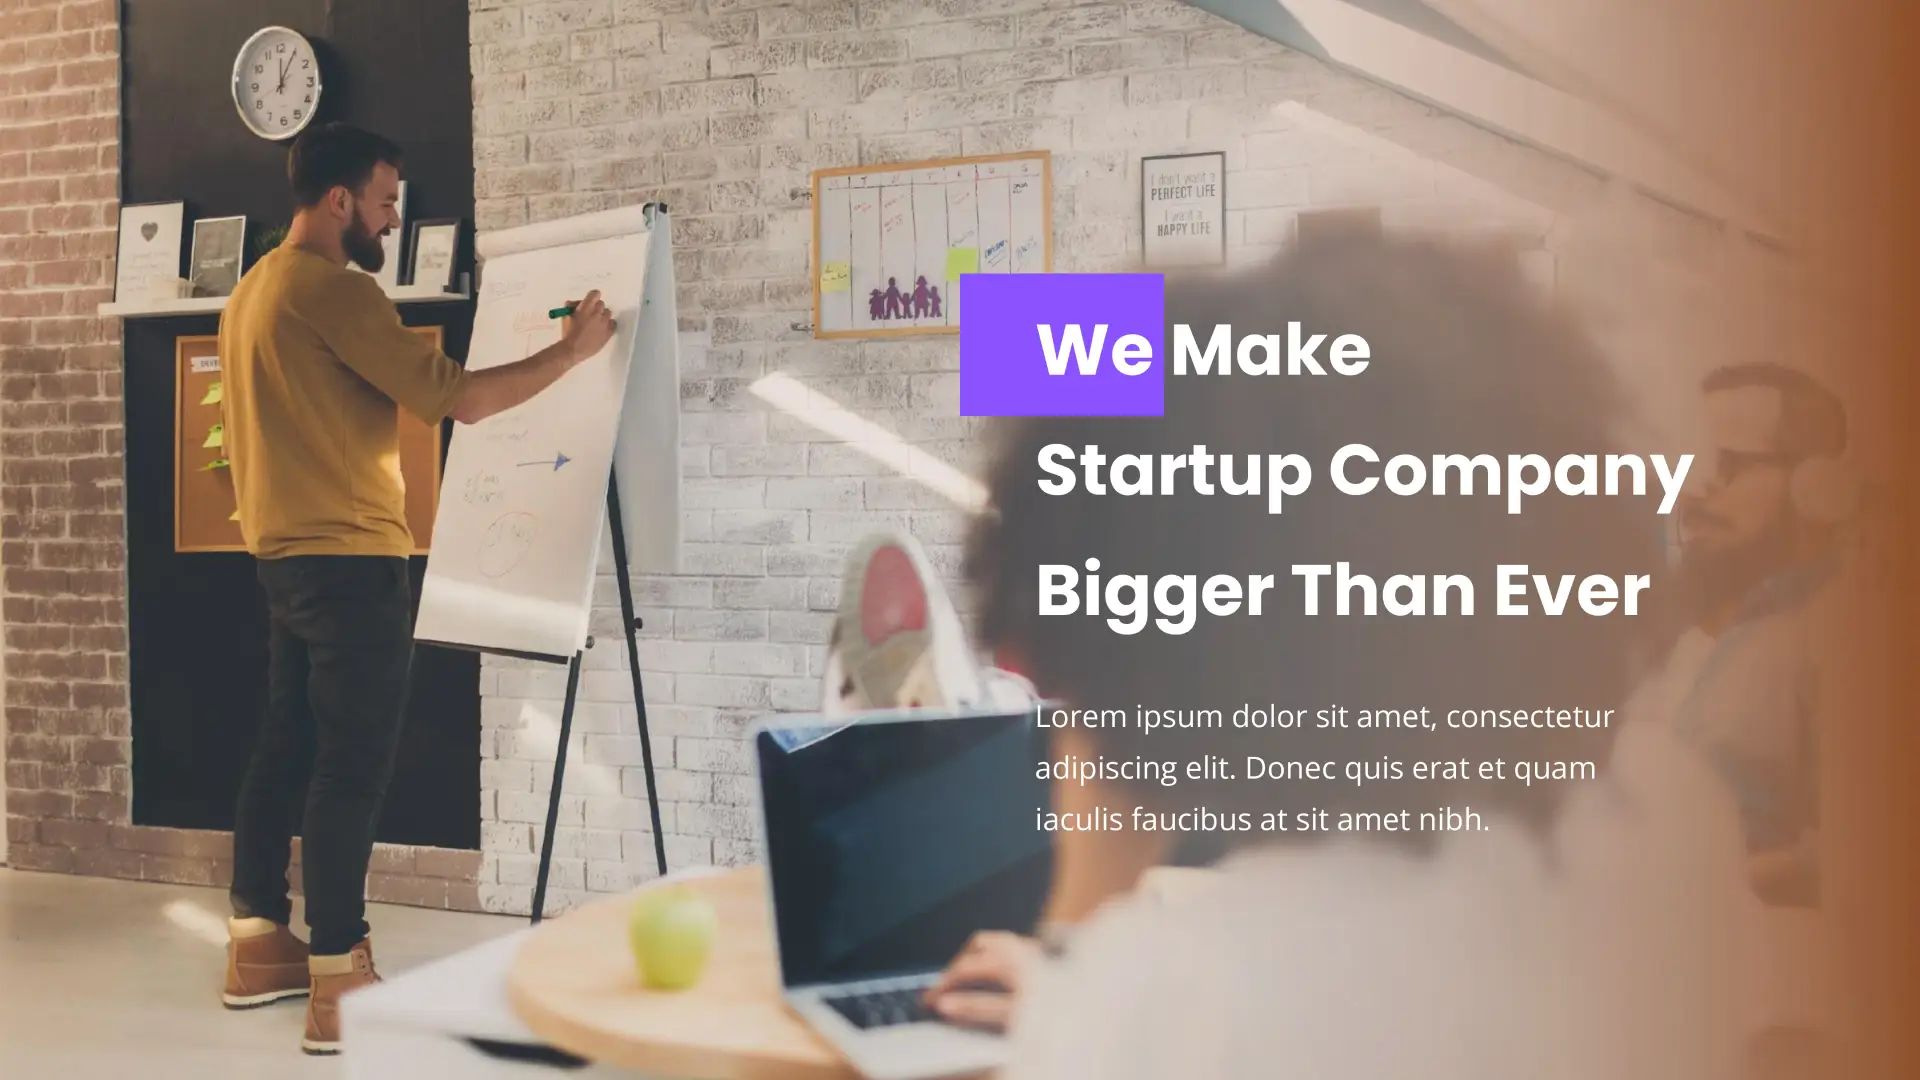 Marketing Startup page 2 Template for Google Slides